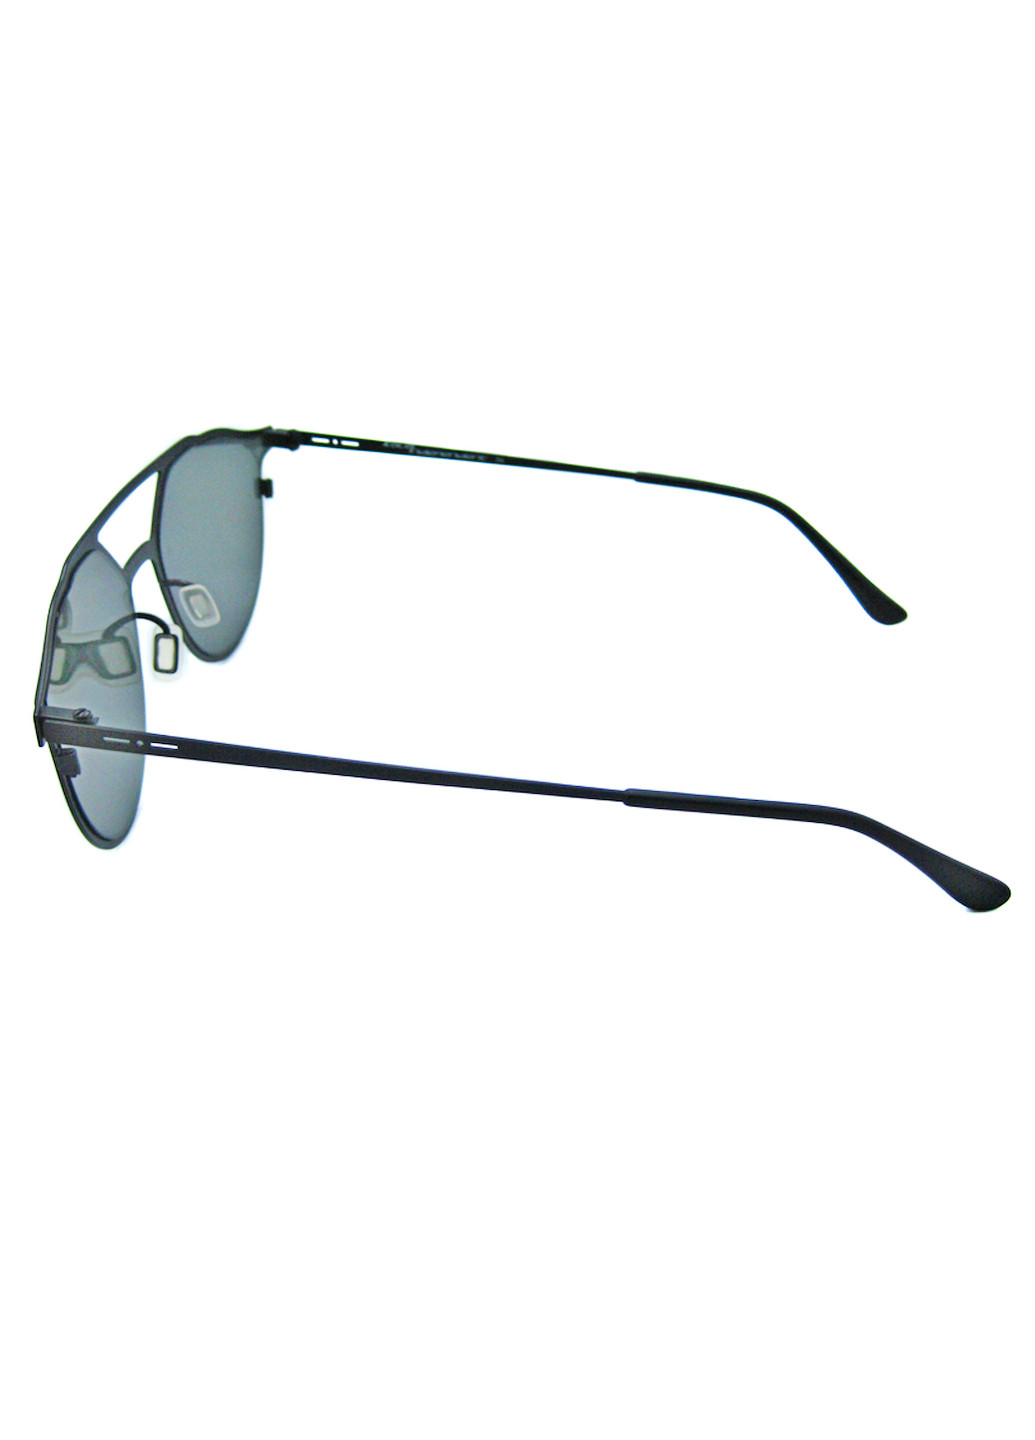 Сонцезахиснi окуляри Italia Independent ii0256.009.000 (260821507)